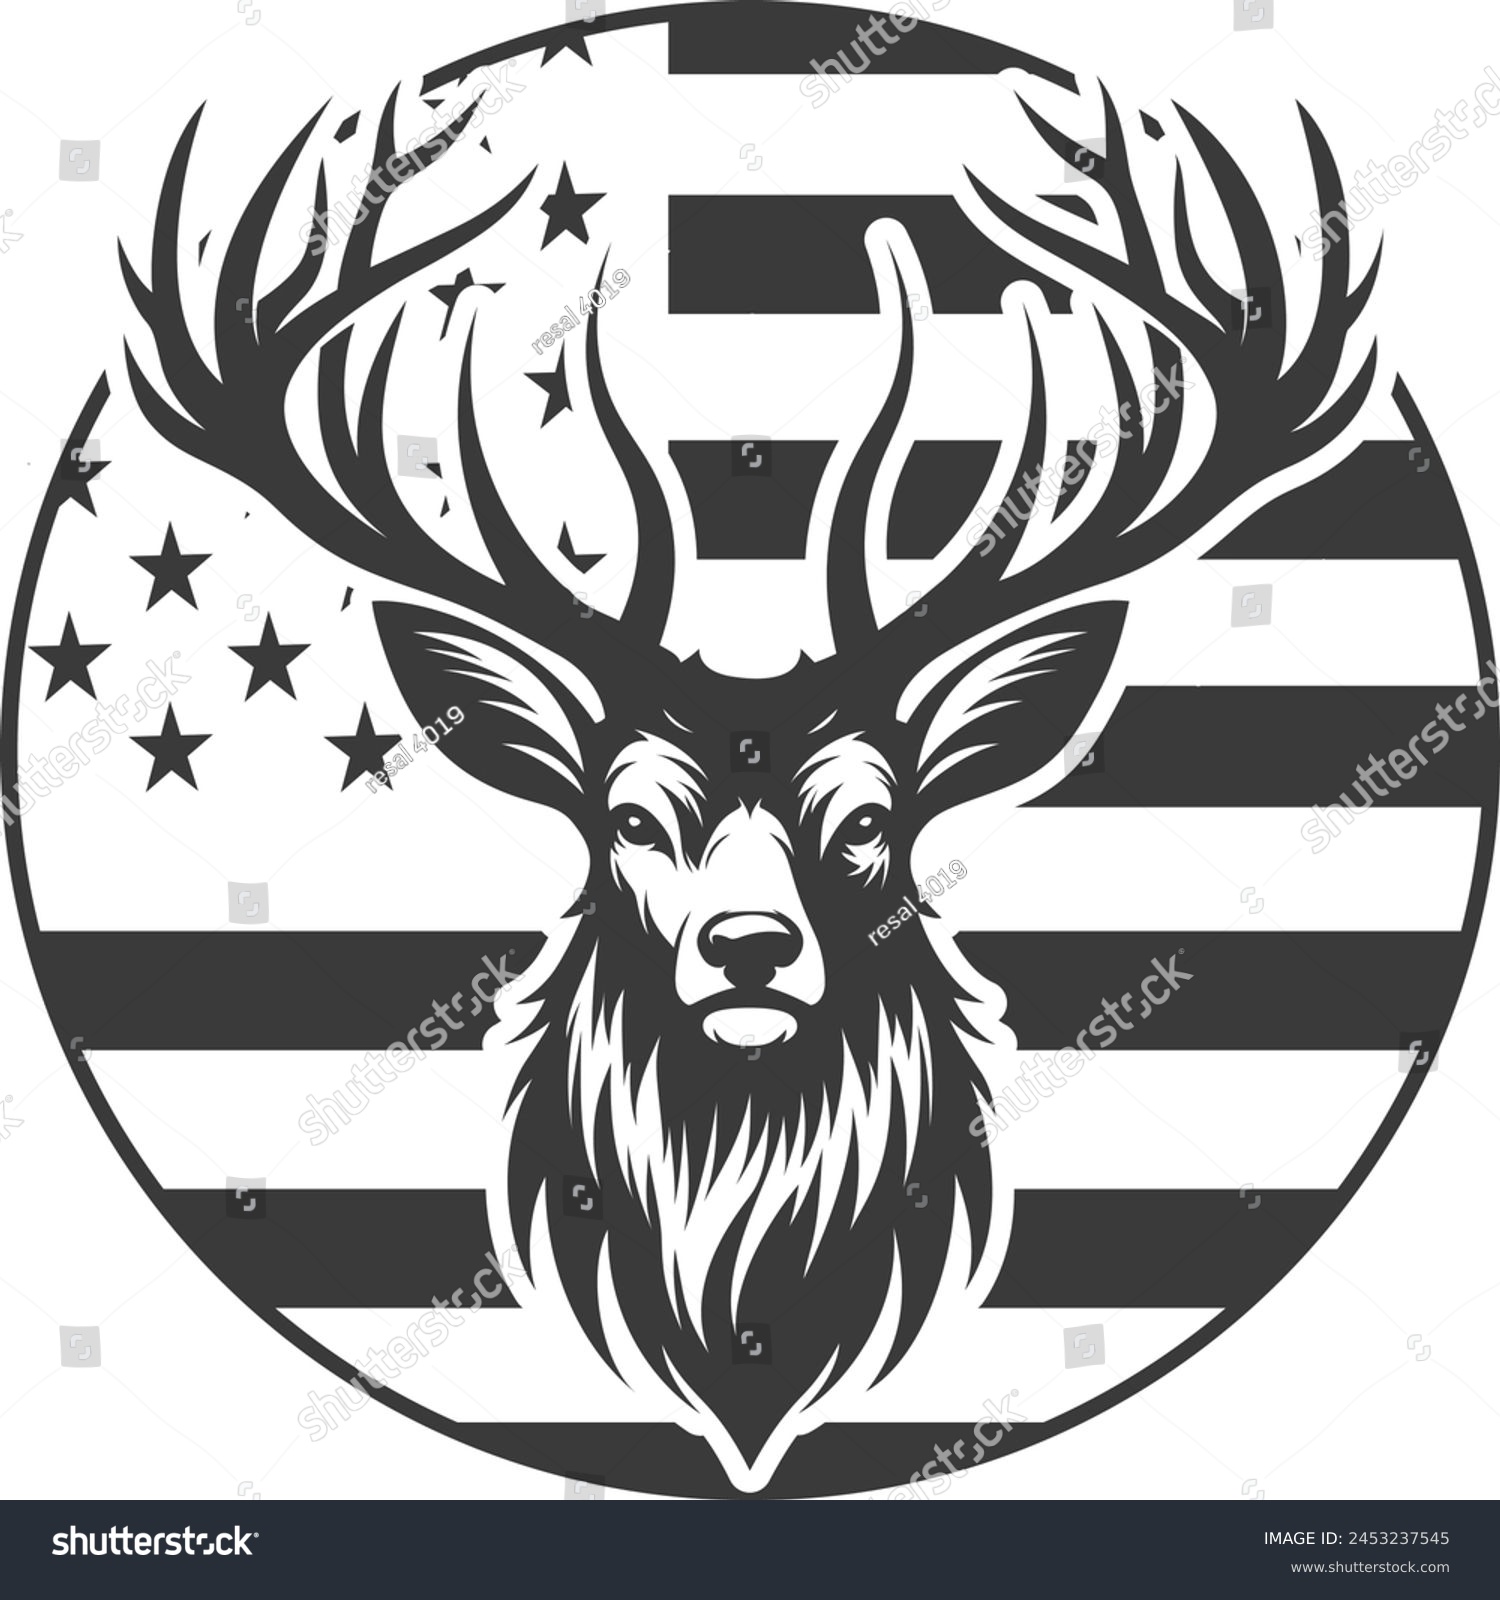 SVG of Deer Hunting American Flag Silhouette Vector Files,Hunting Clipart,American Flag Deer,Deer Hunting T-shirt Design svg